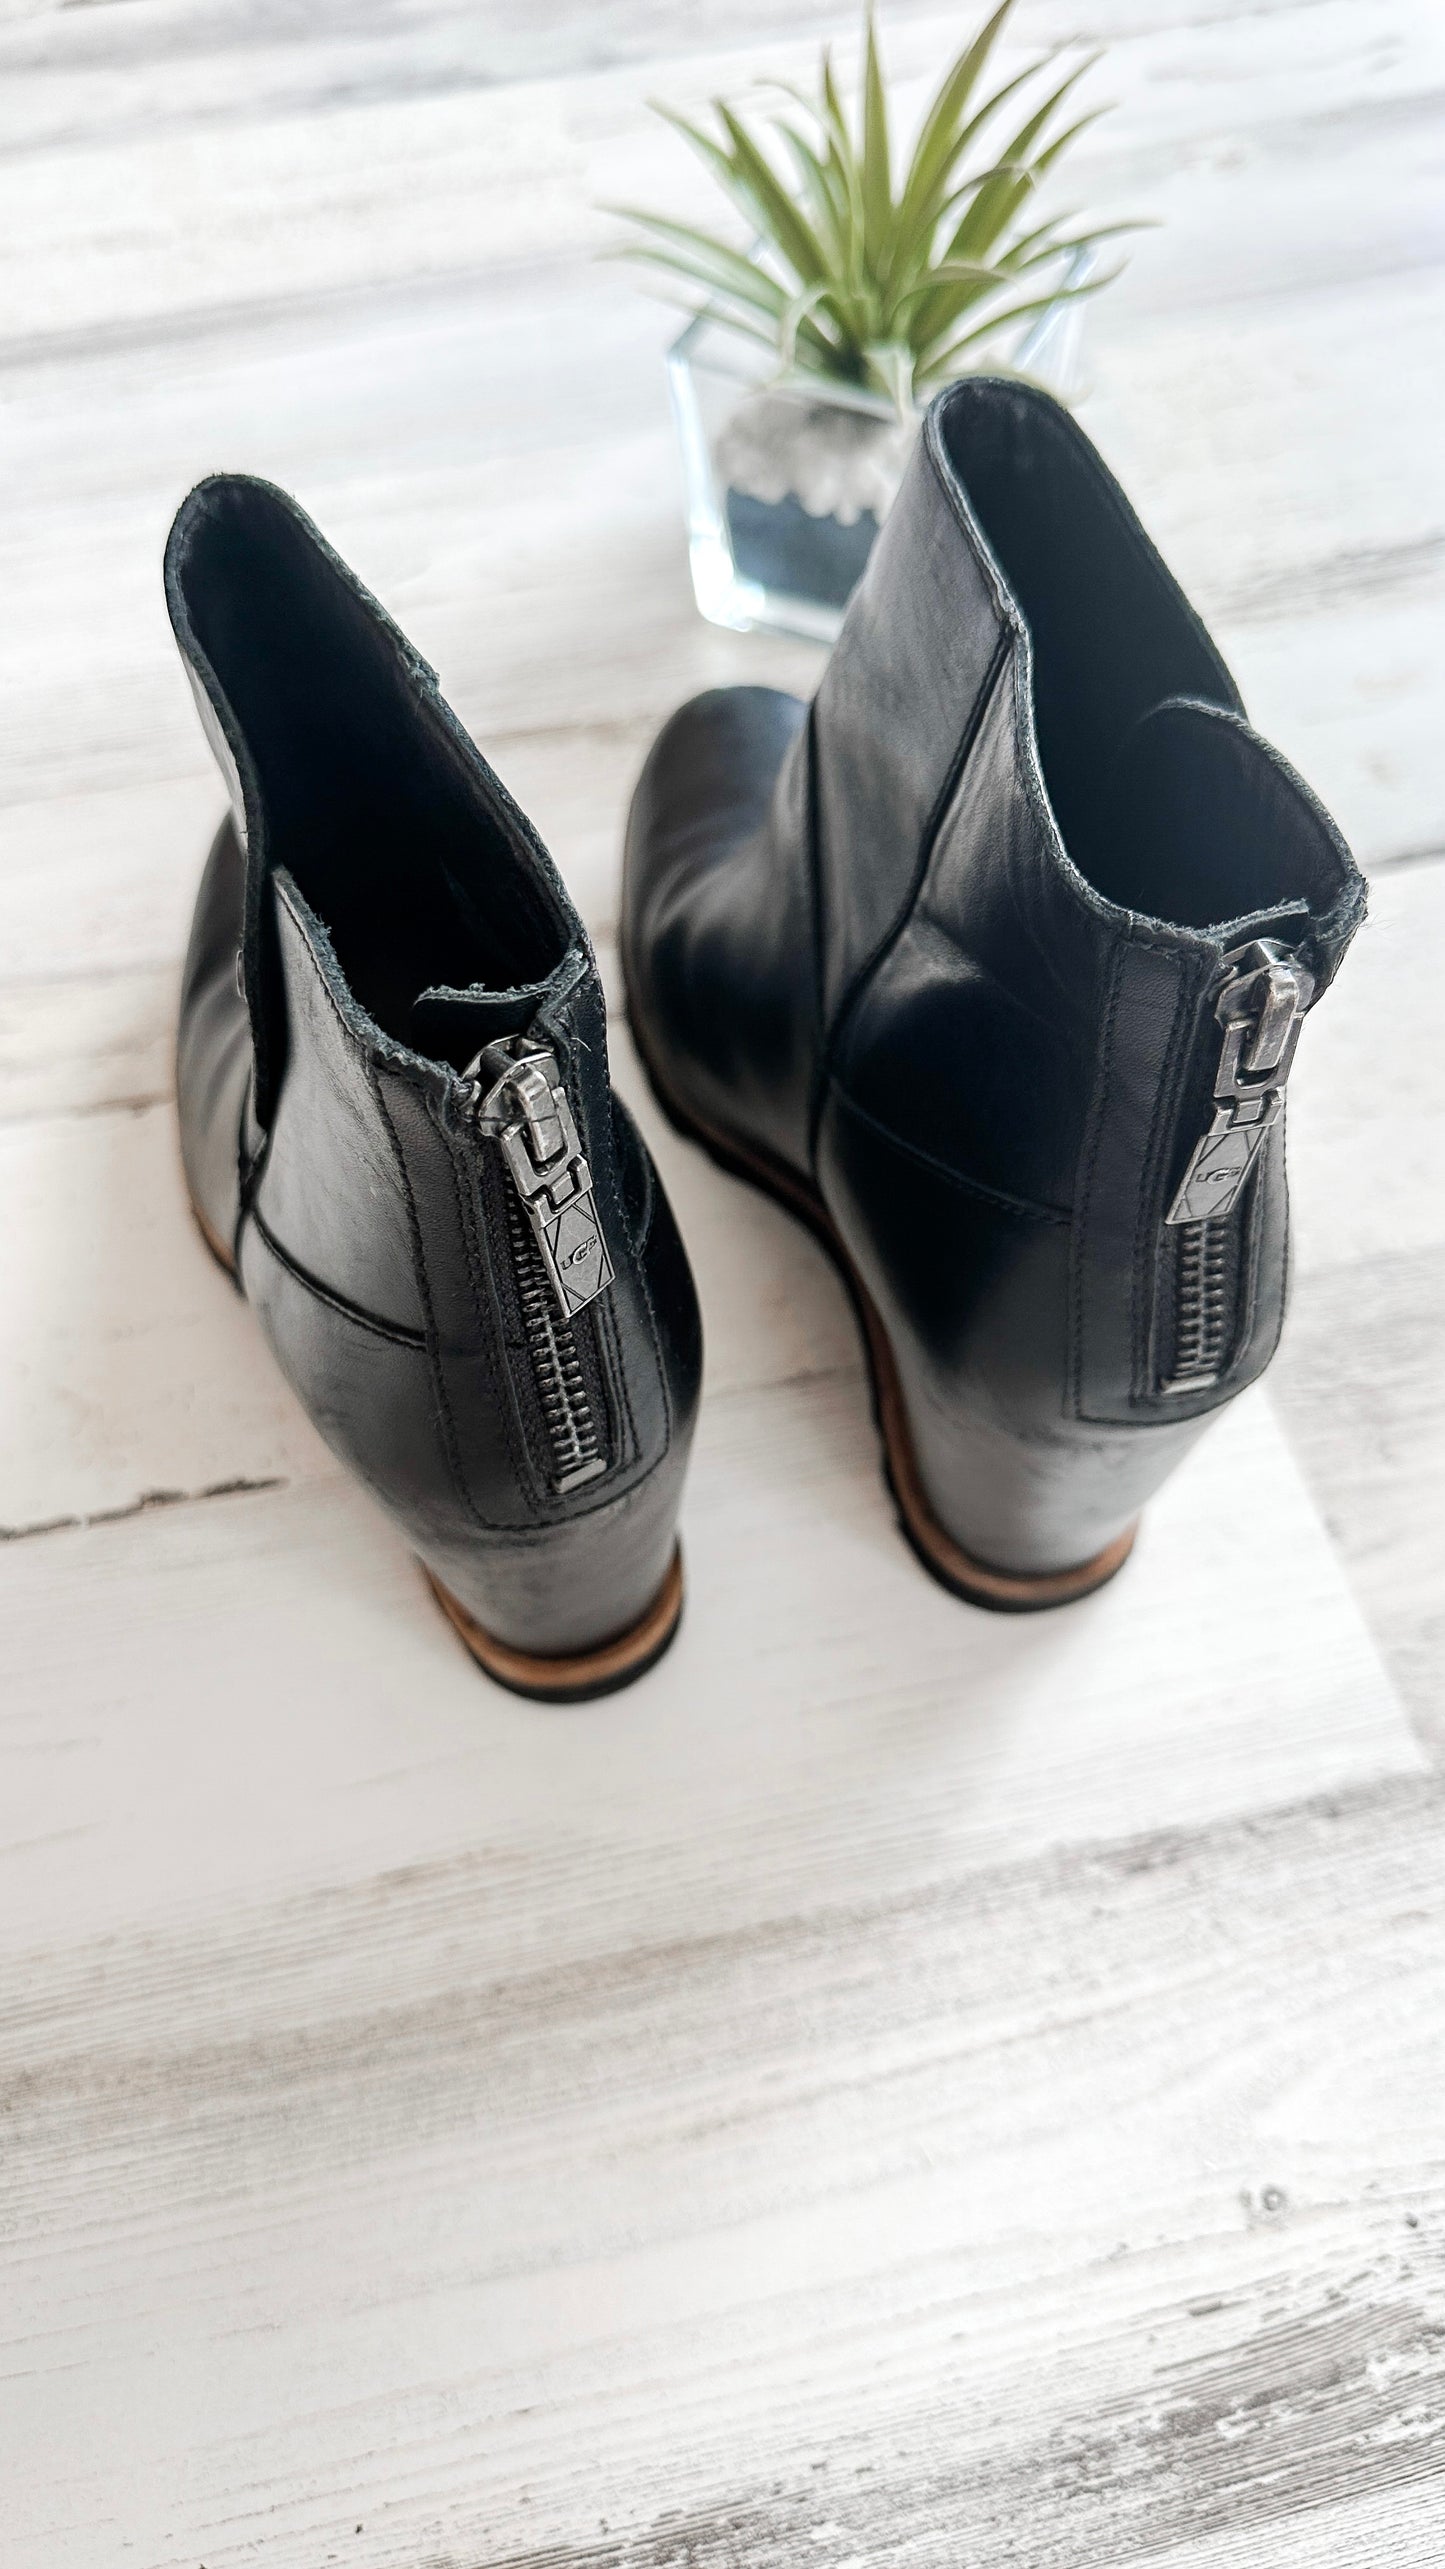 UGG Black Leather Amal Wedge Boots (7.5)